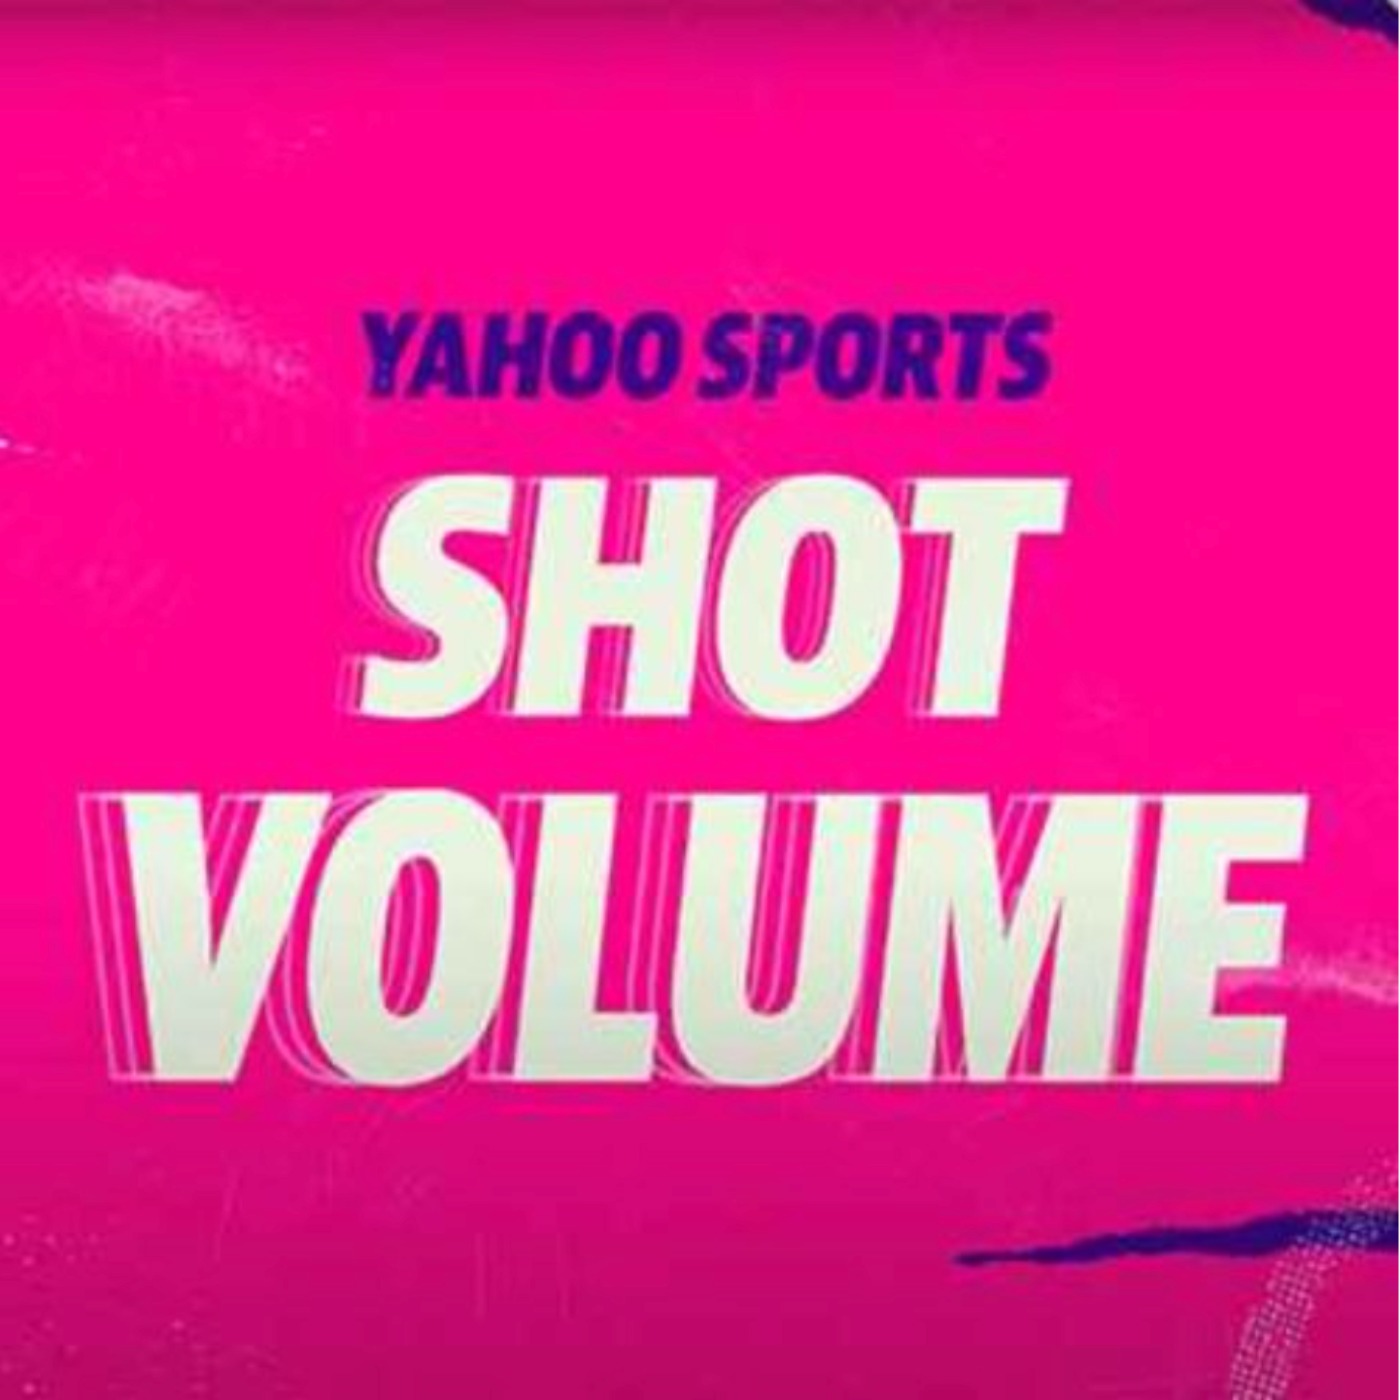 Shot Volume: Ryan Reaves, Logan Cooley and zone defense schemes